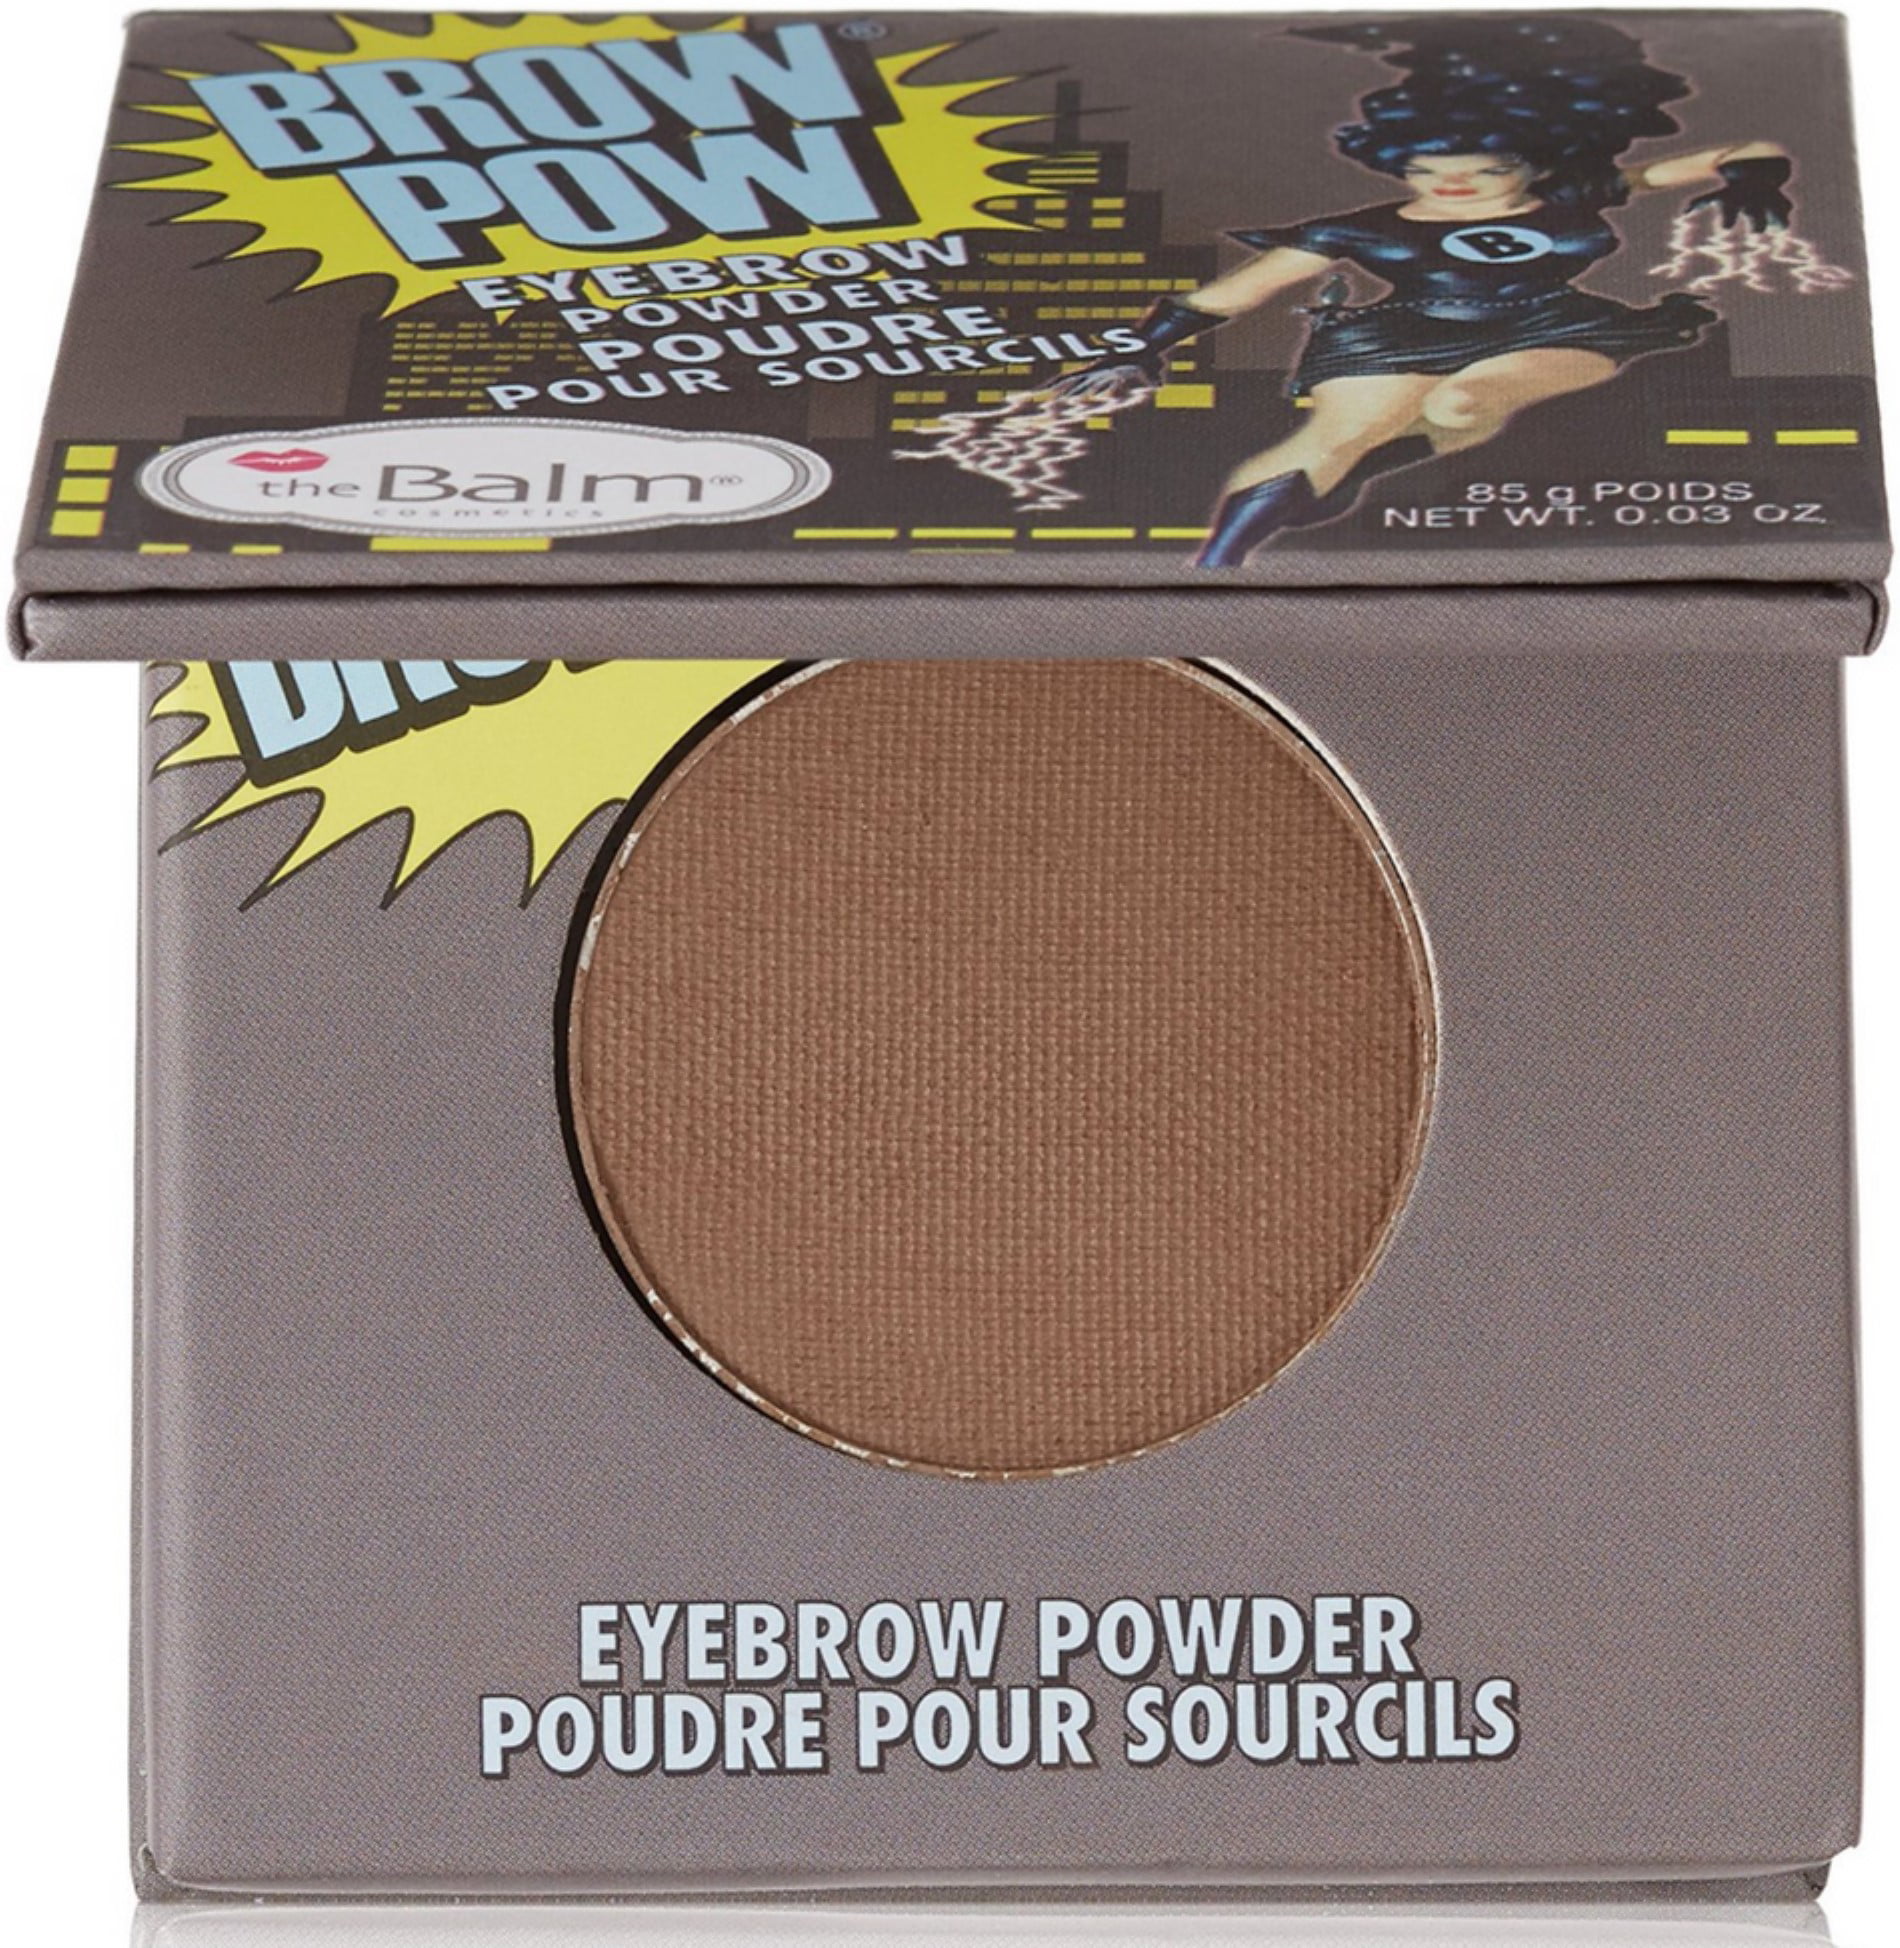 the balm eyebrow powder review